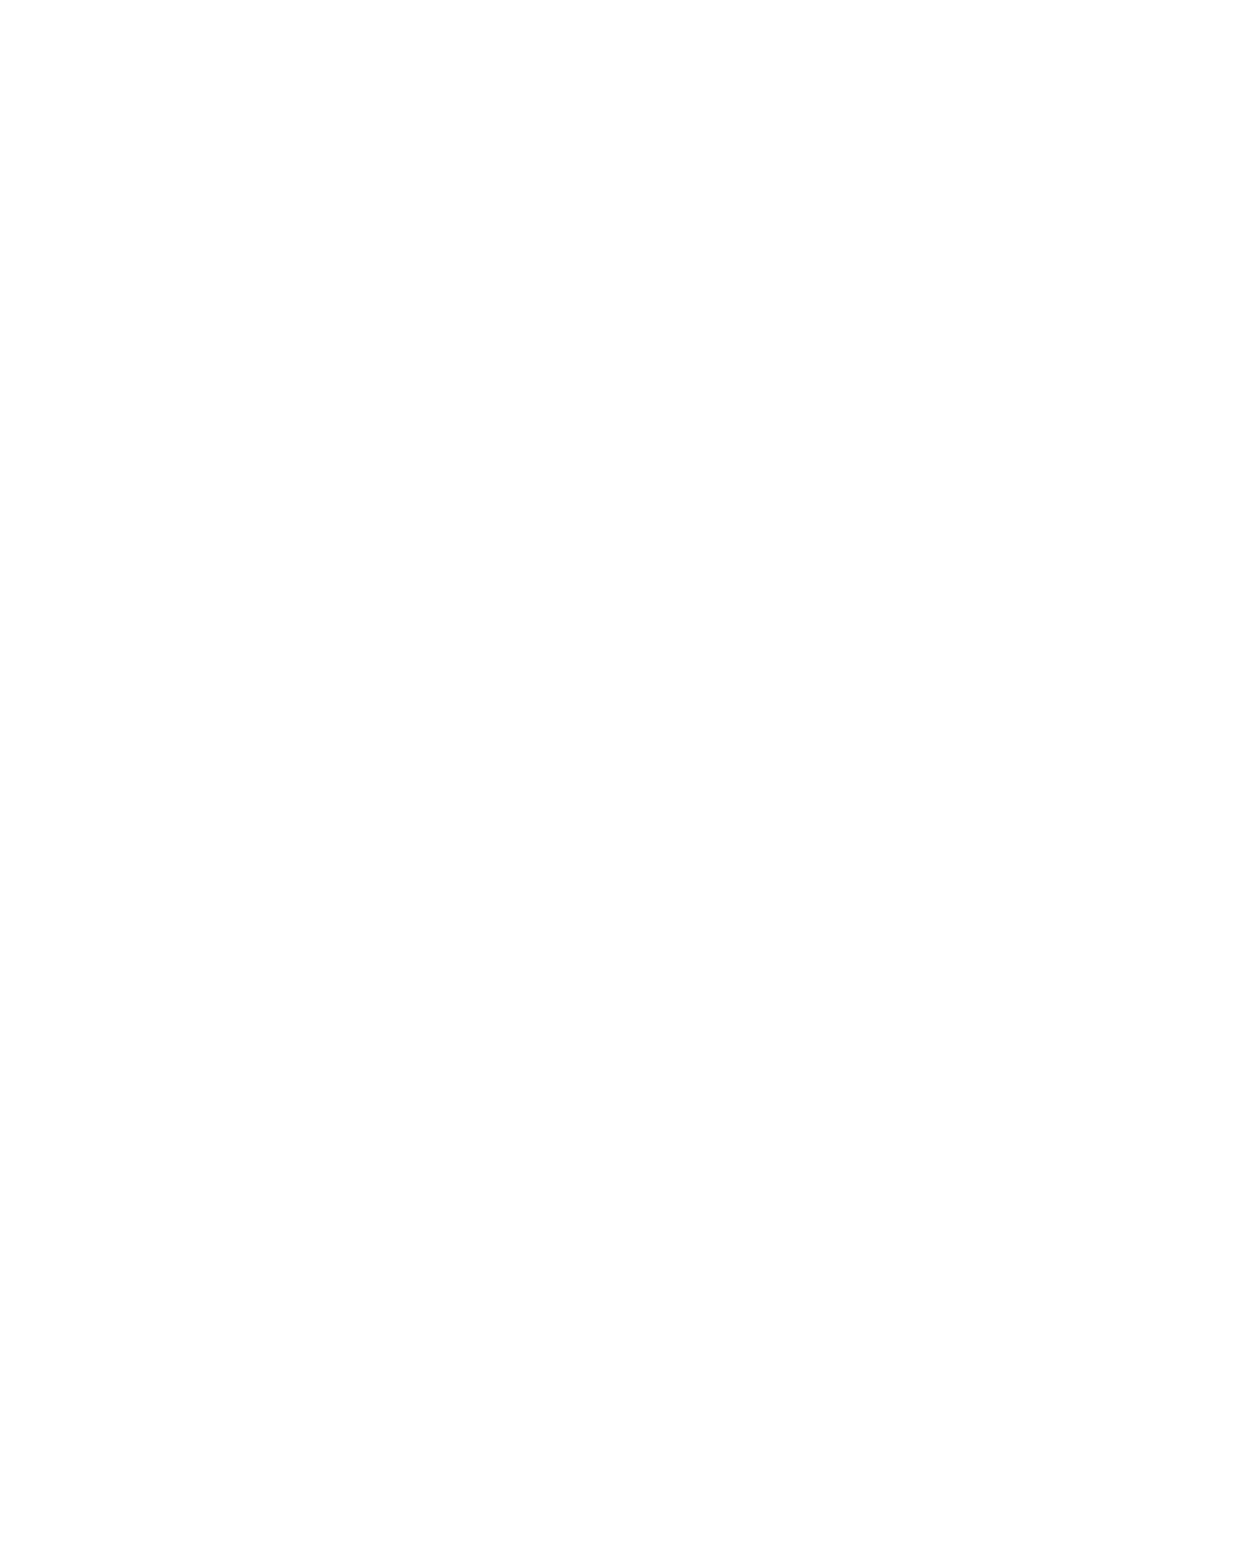 Caledonia Mining logo for dark backgrounds (transparent PNG)